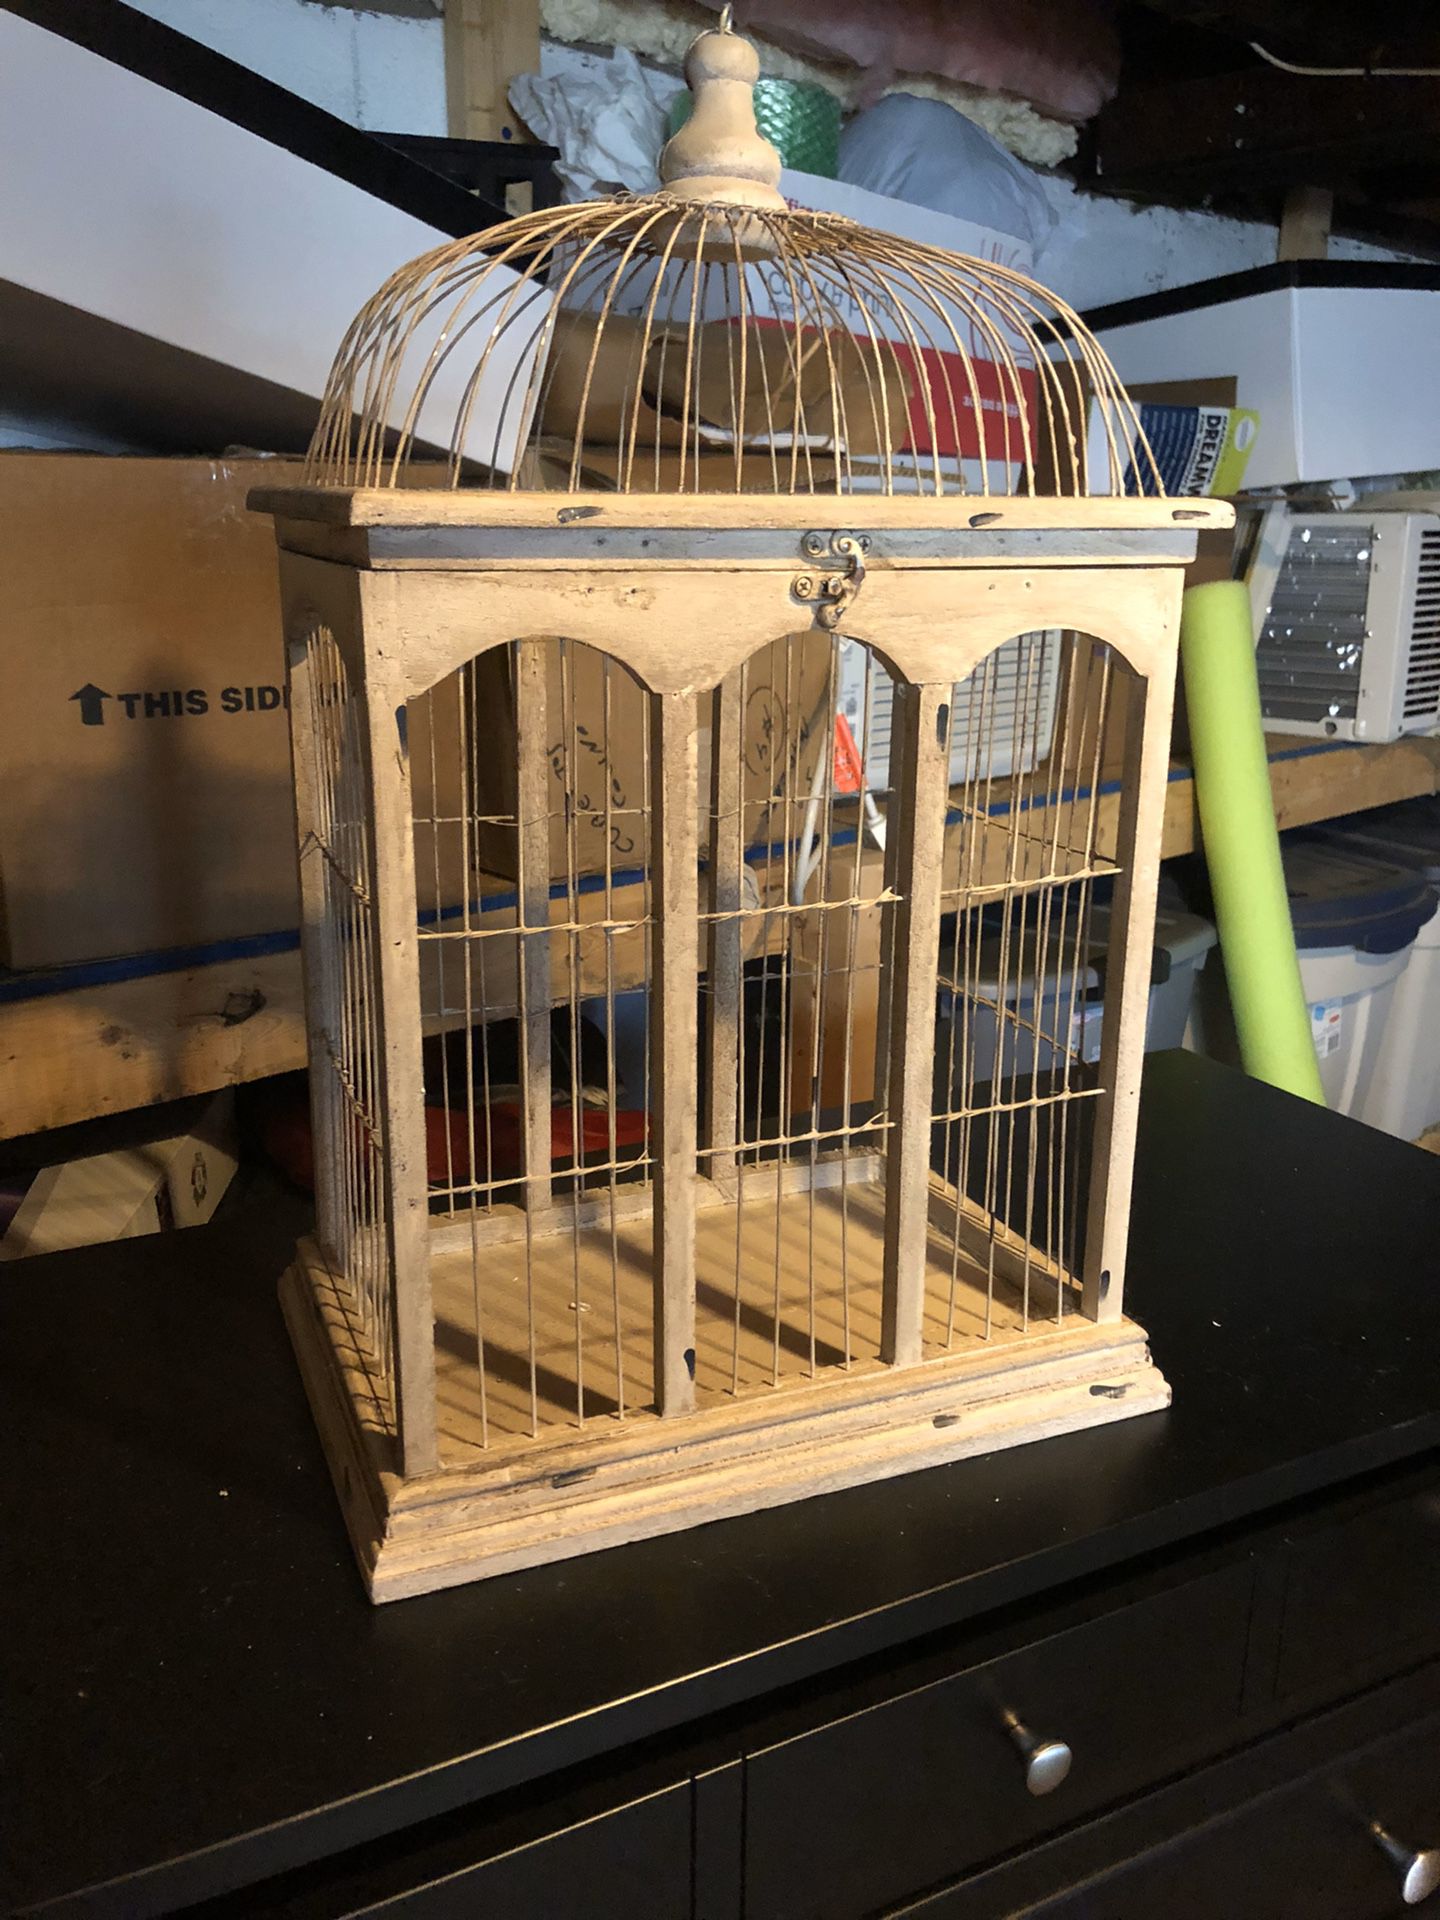 Decorative birdcage